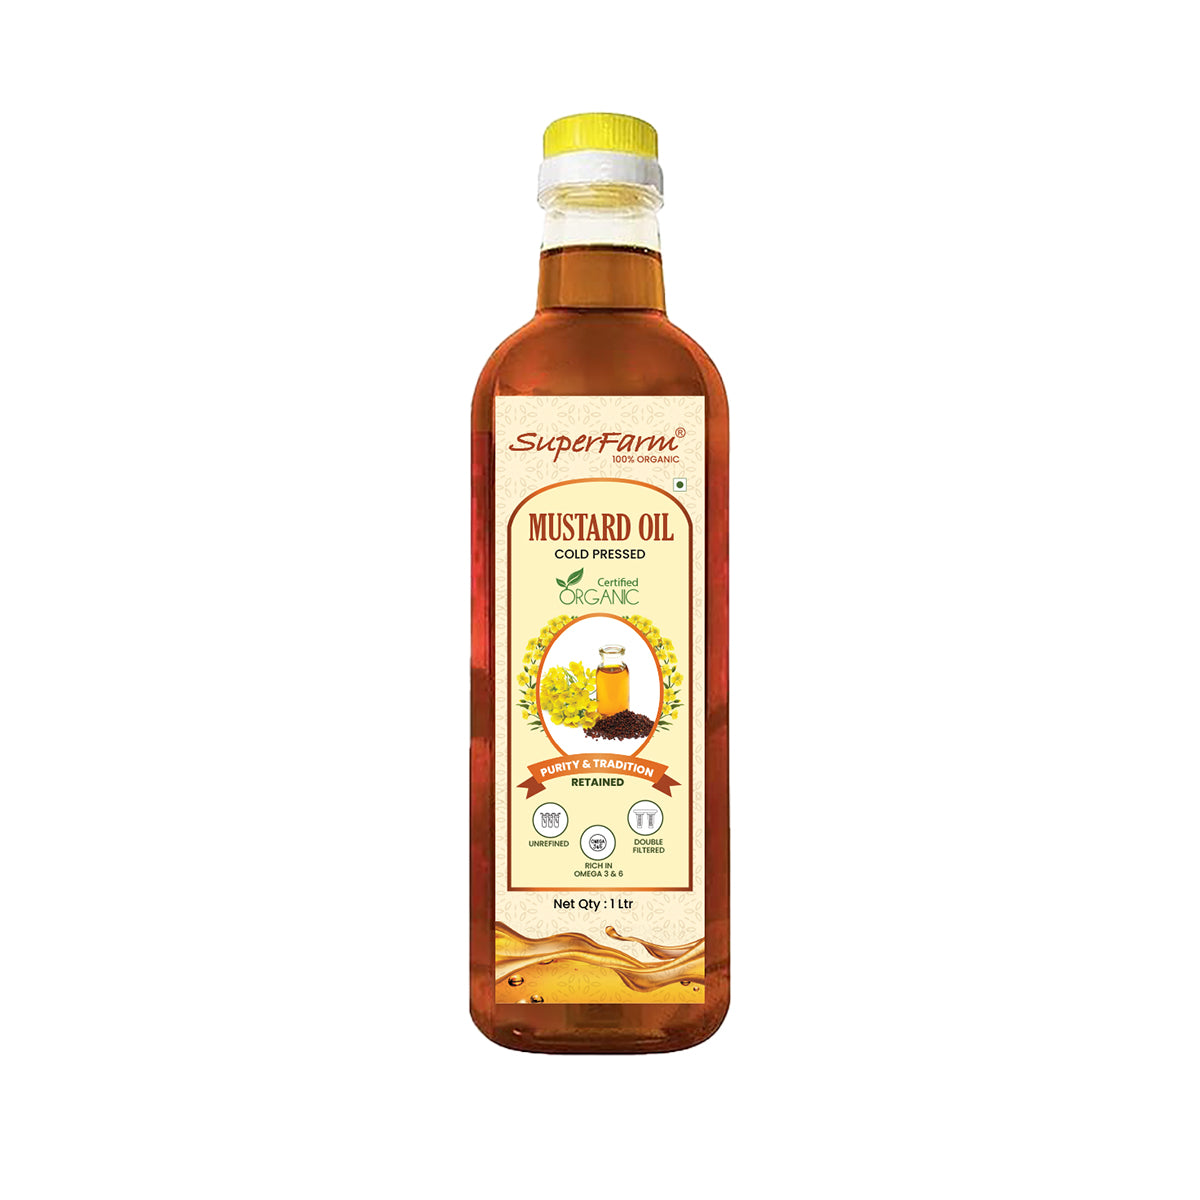 Superfarm Organic Cold Pressed Mustard Oil